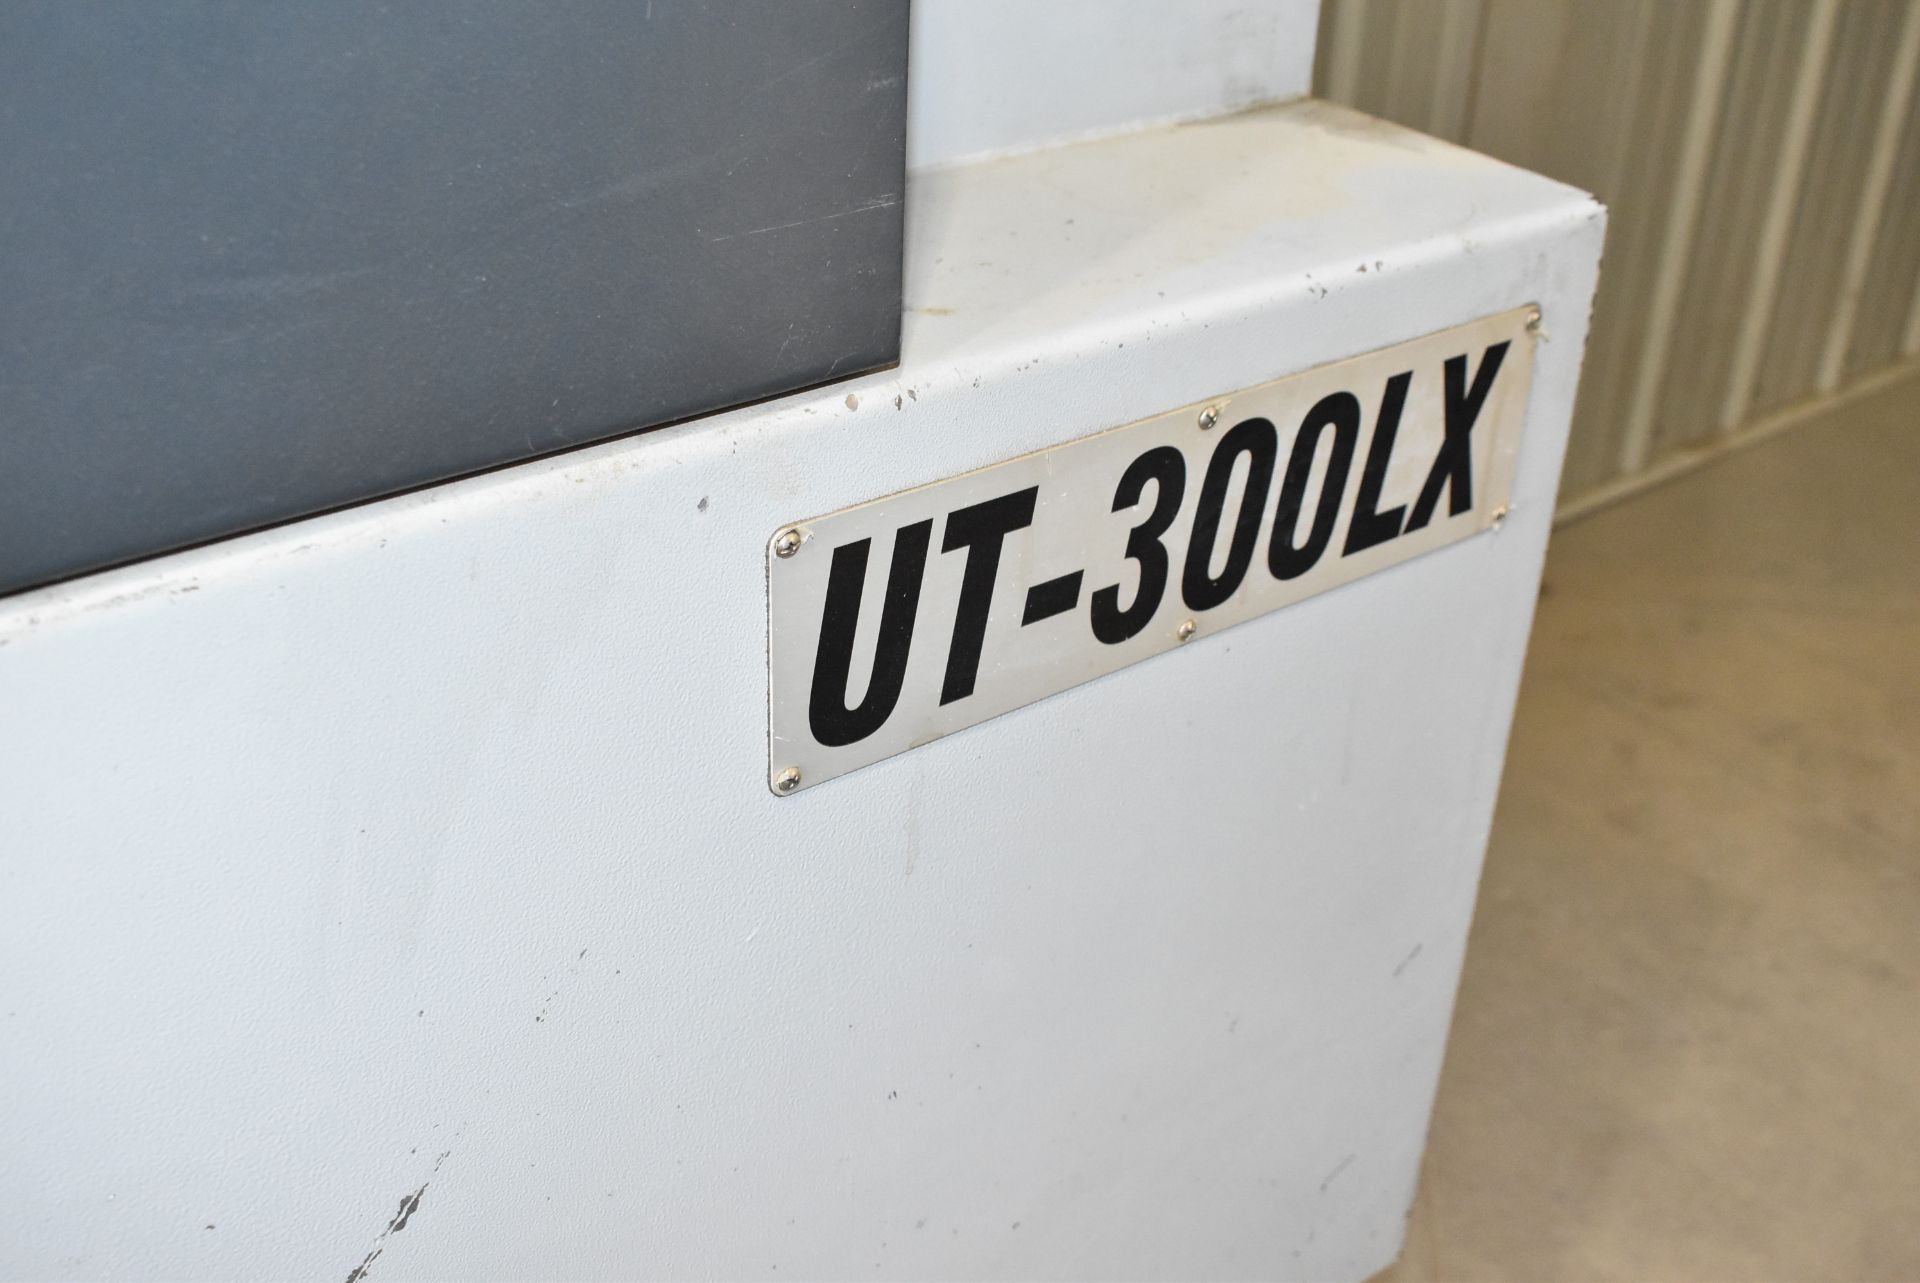 ACCUWAY (2012) UT-300LX CNC SLANT BED TURNING CENTER WITH FANUC 0I-TD CNC CONTROL, 22" 3-JAW - Image 27 of 29